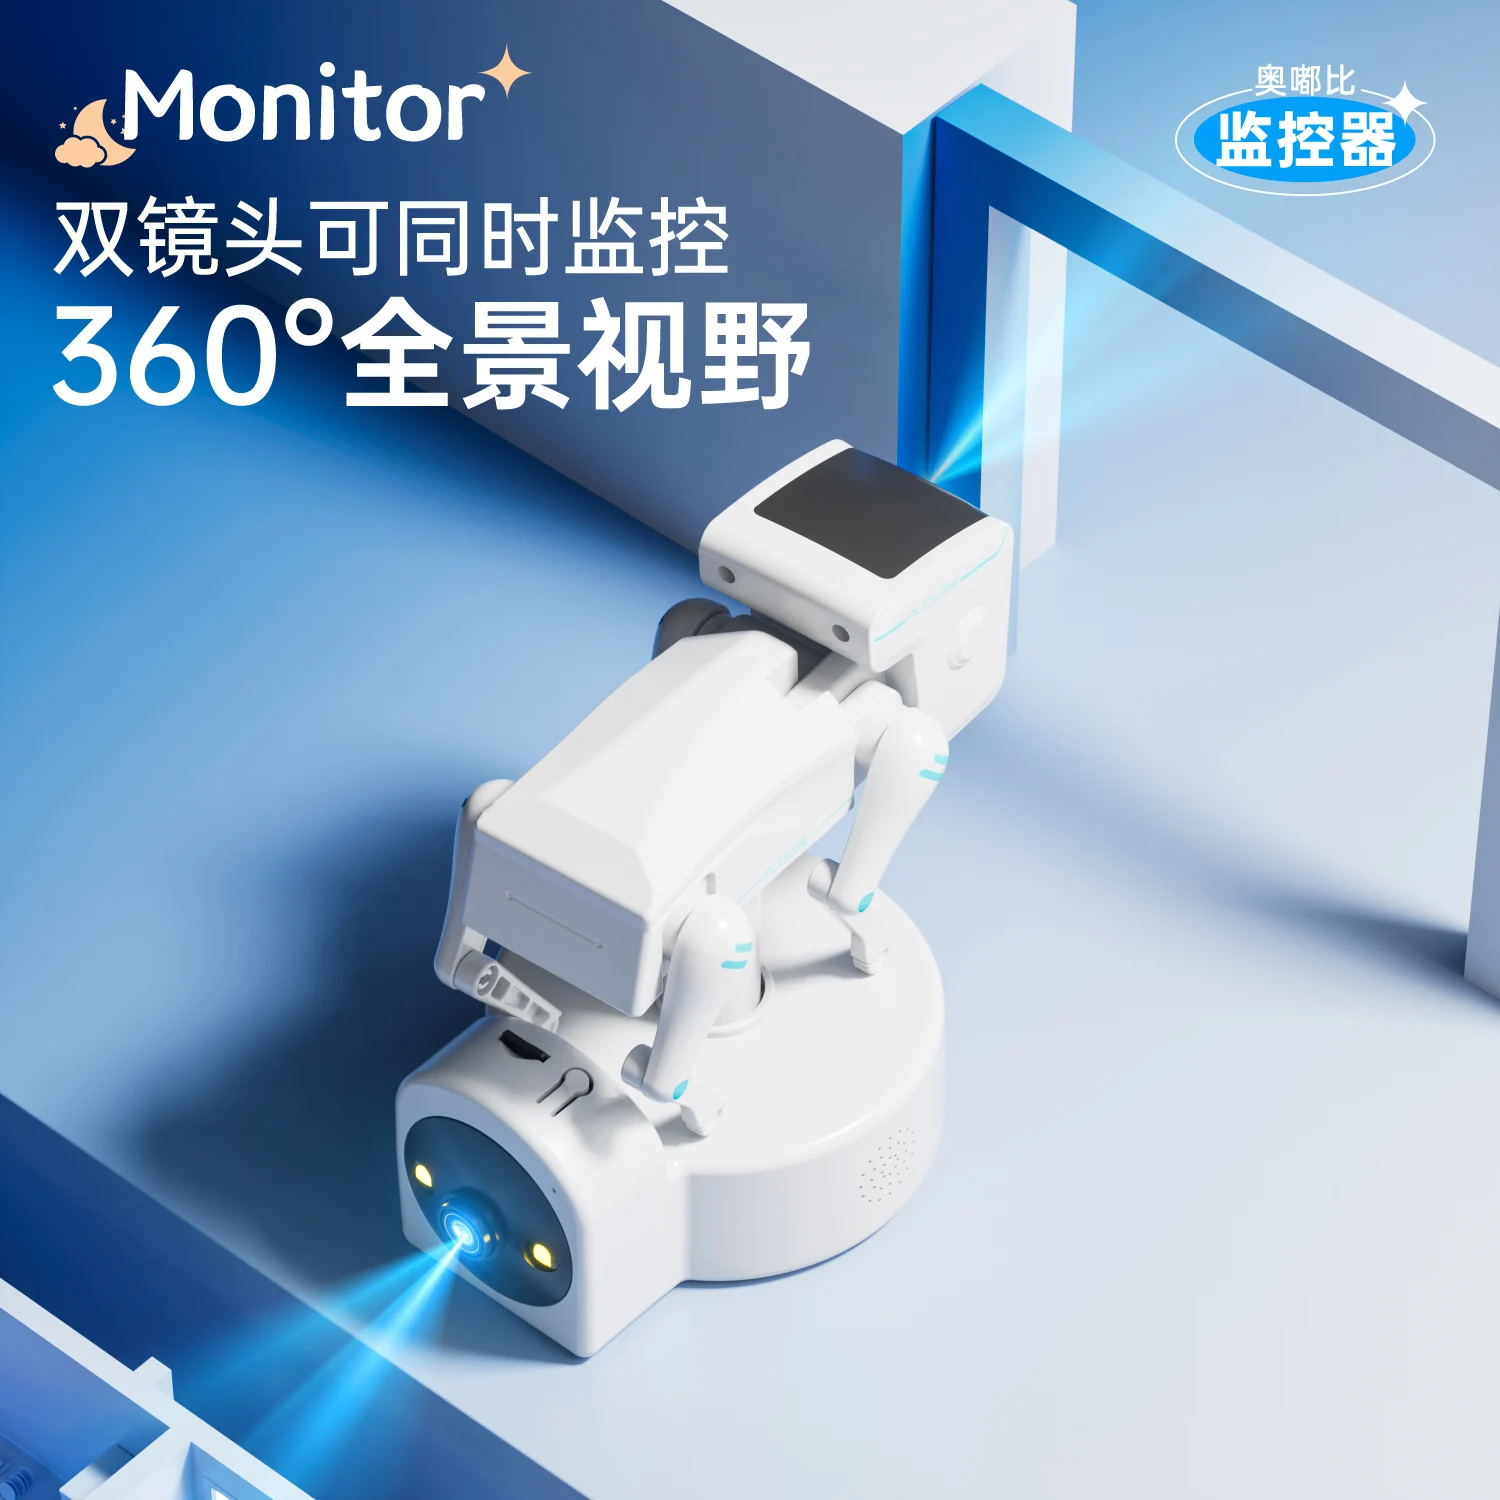 3MP 1296P 5G Yoosee APP Dual Lens PTZ RobotDog IP Camera Full Color AI Humanoid Detection Home Security CCTV Baby Monitor